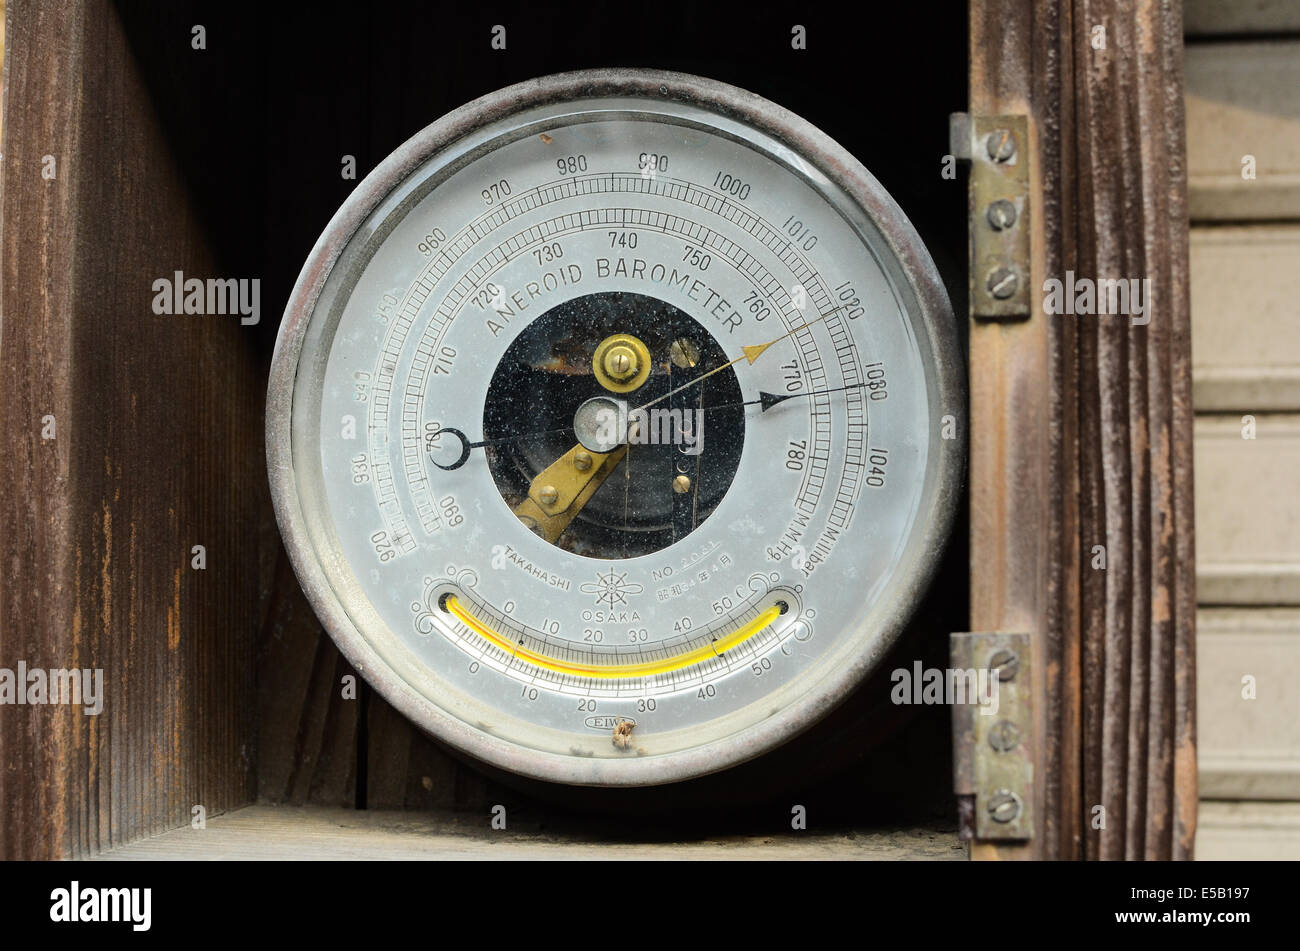 Outdoor barometer stock photo. Image of outdoor, street - 22242384